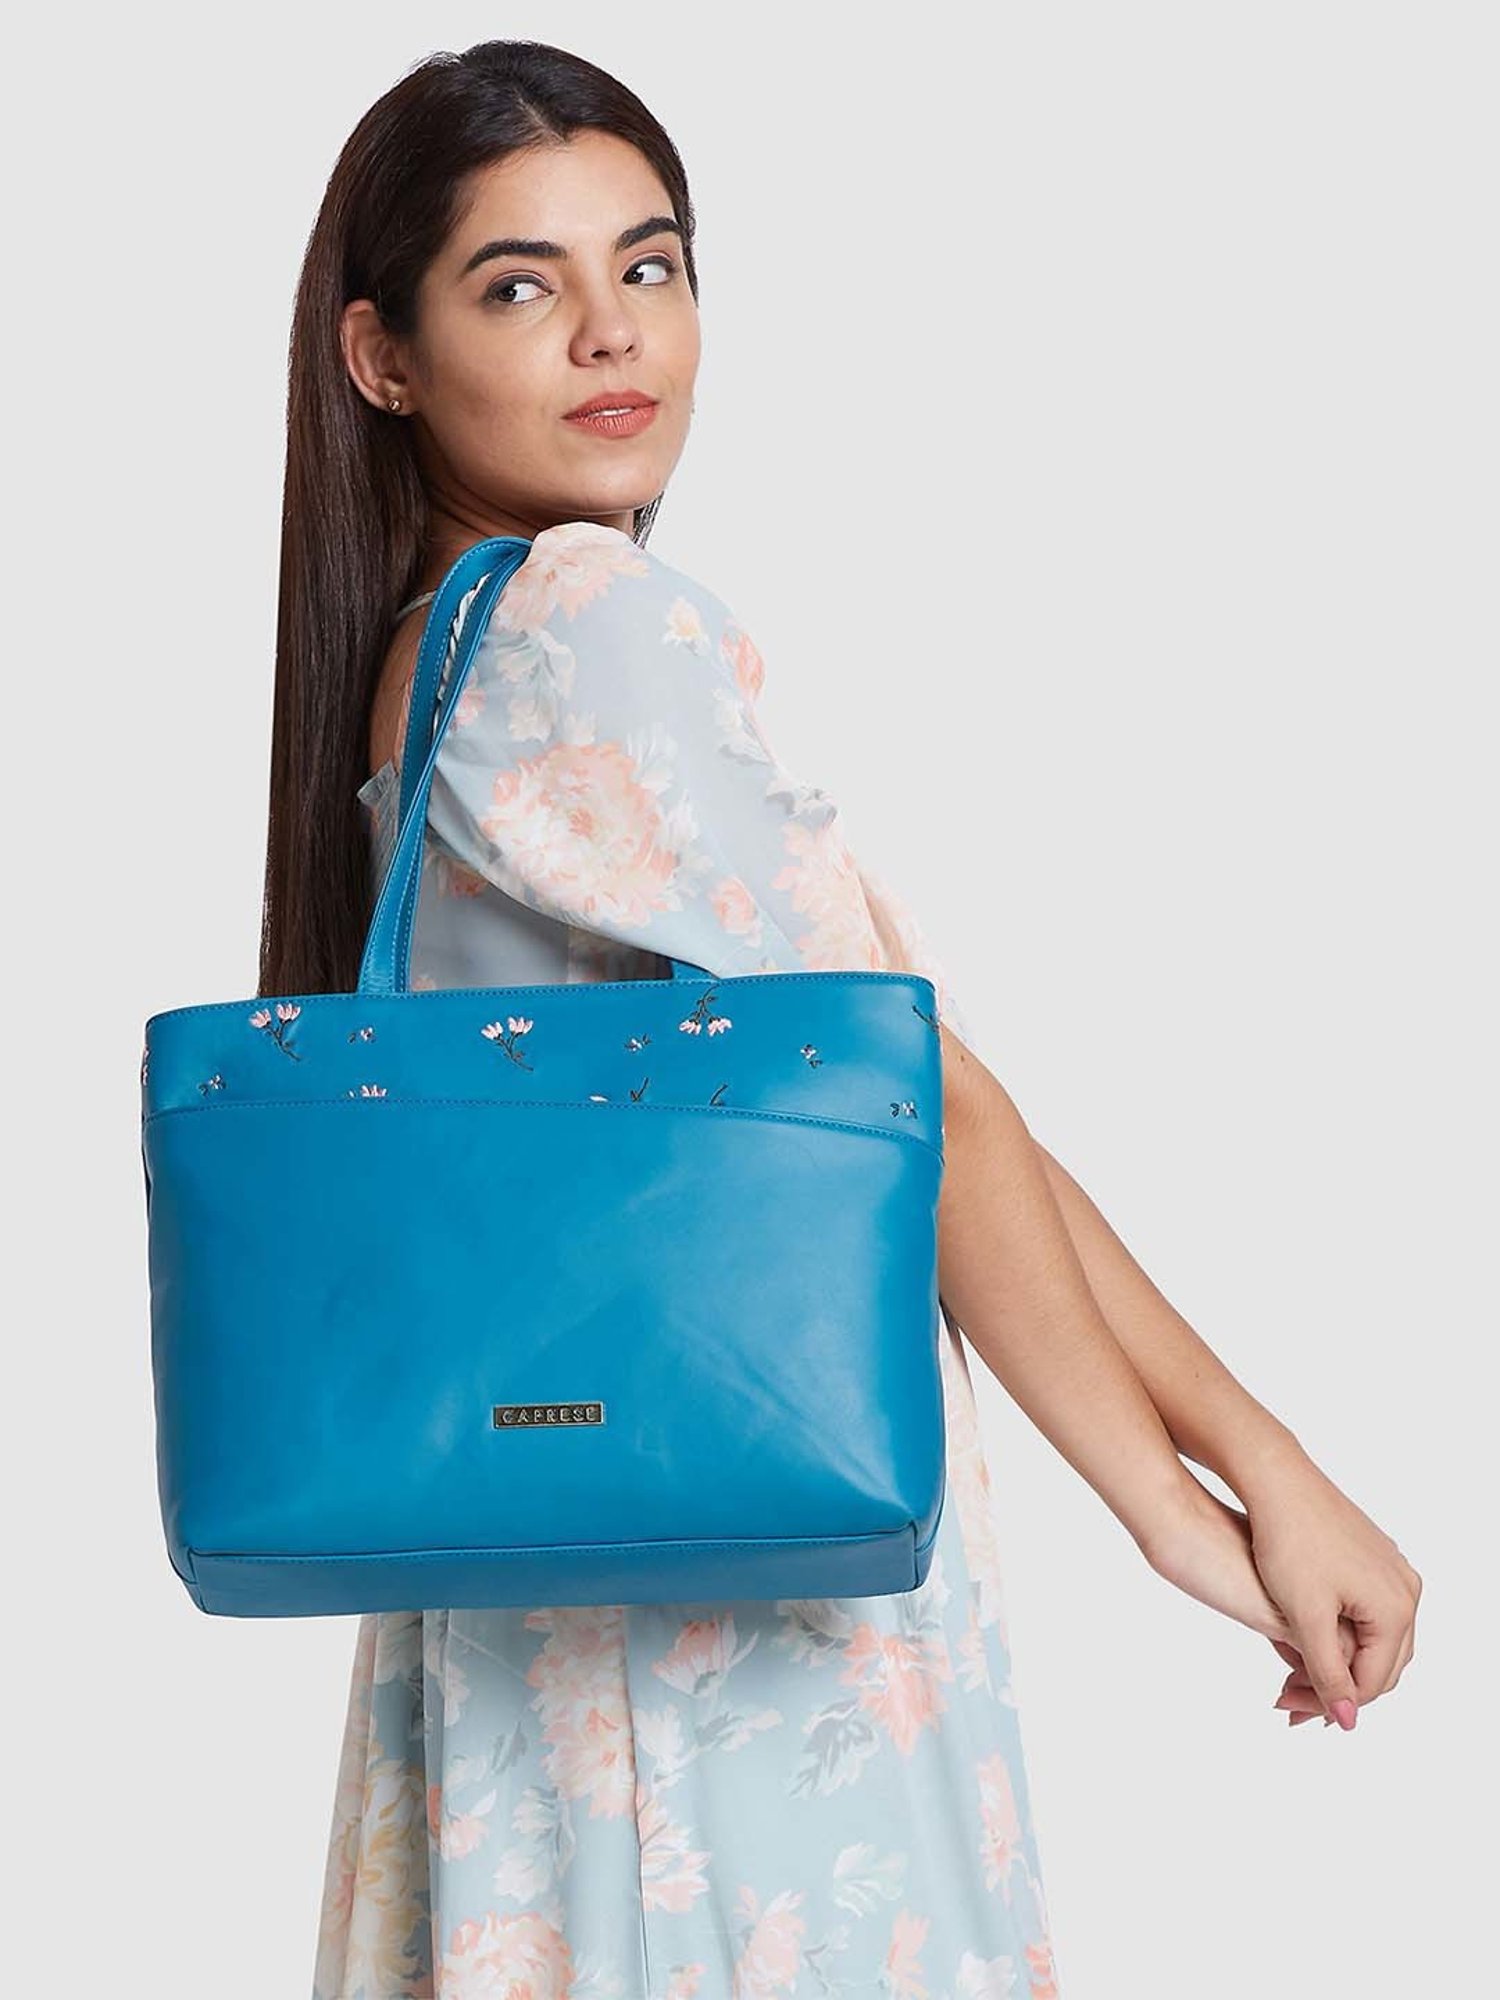 NUFA Blue Solid Small Shoulder Handbag